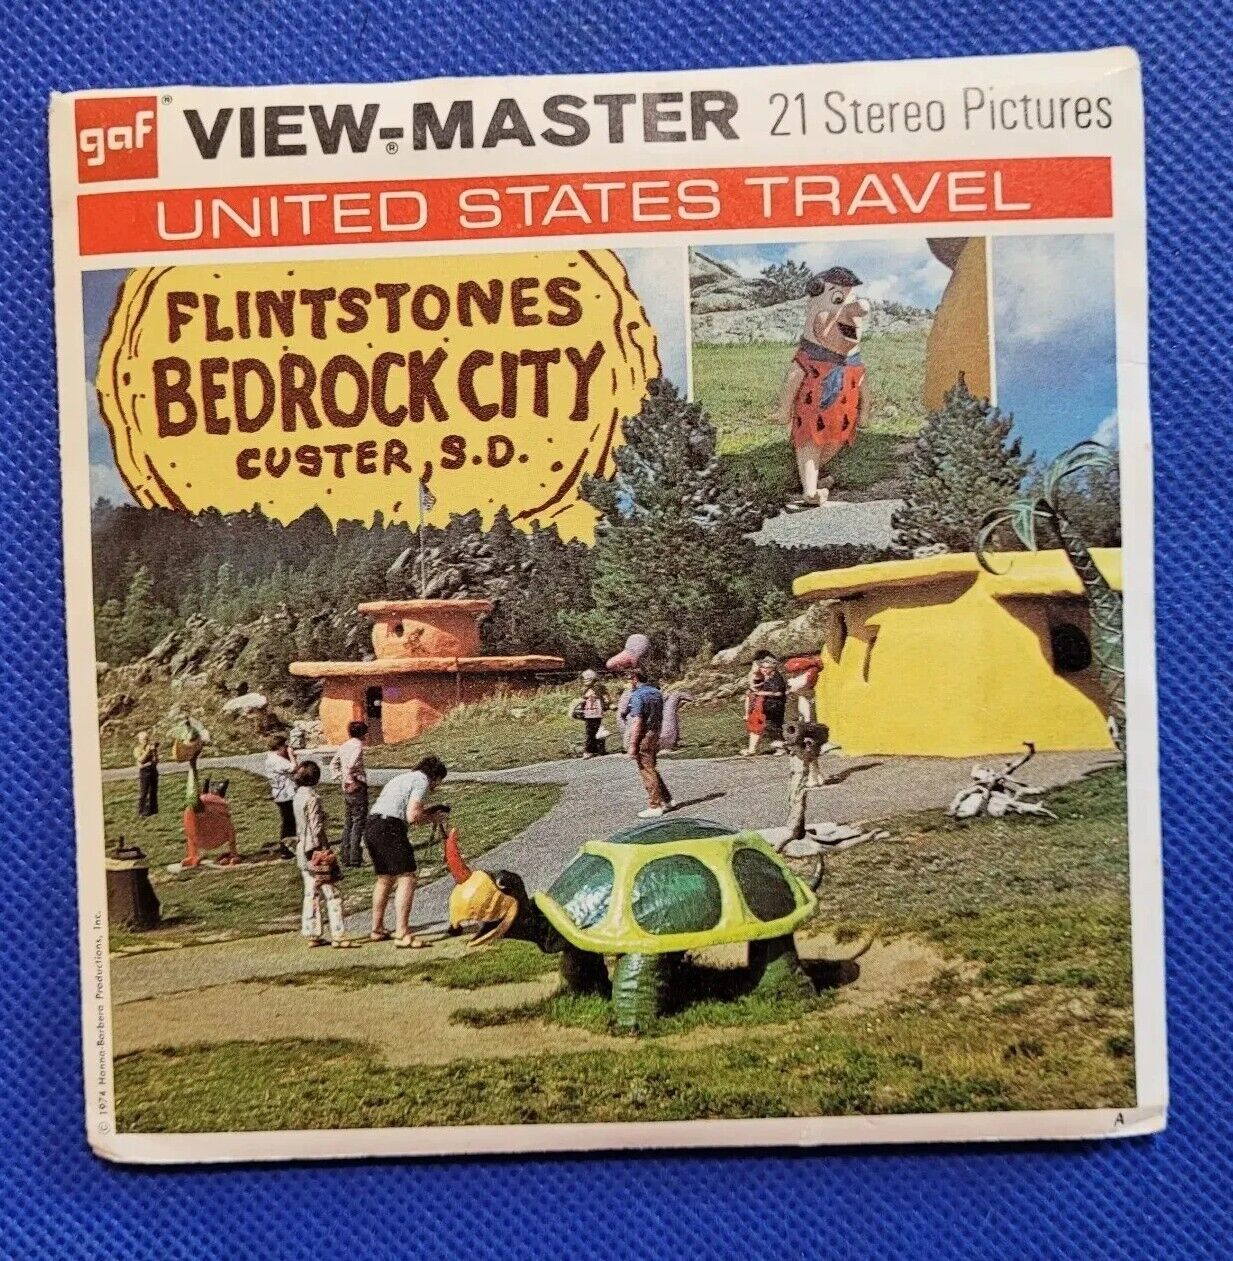 COLOR A493 Gaf Flintstones Bedrock City Custer S Dakota view-master Reels Packet